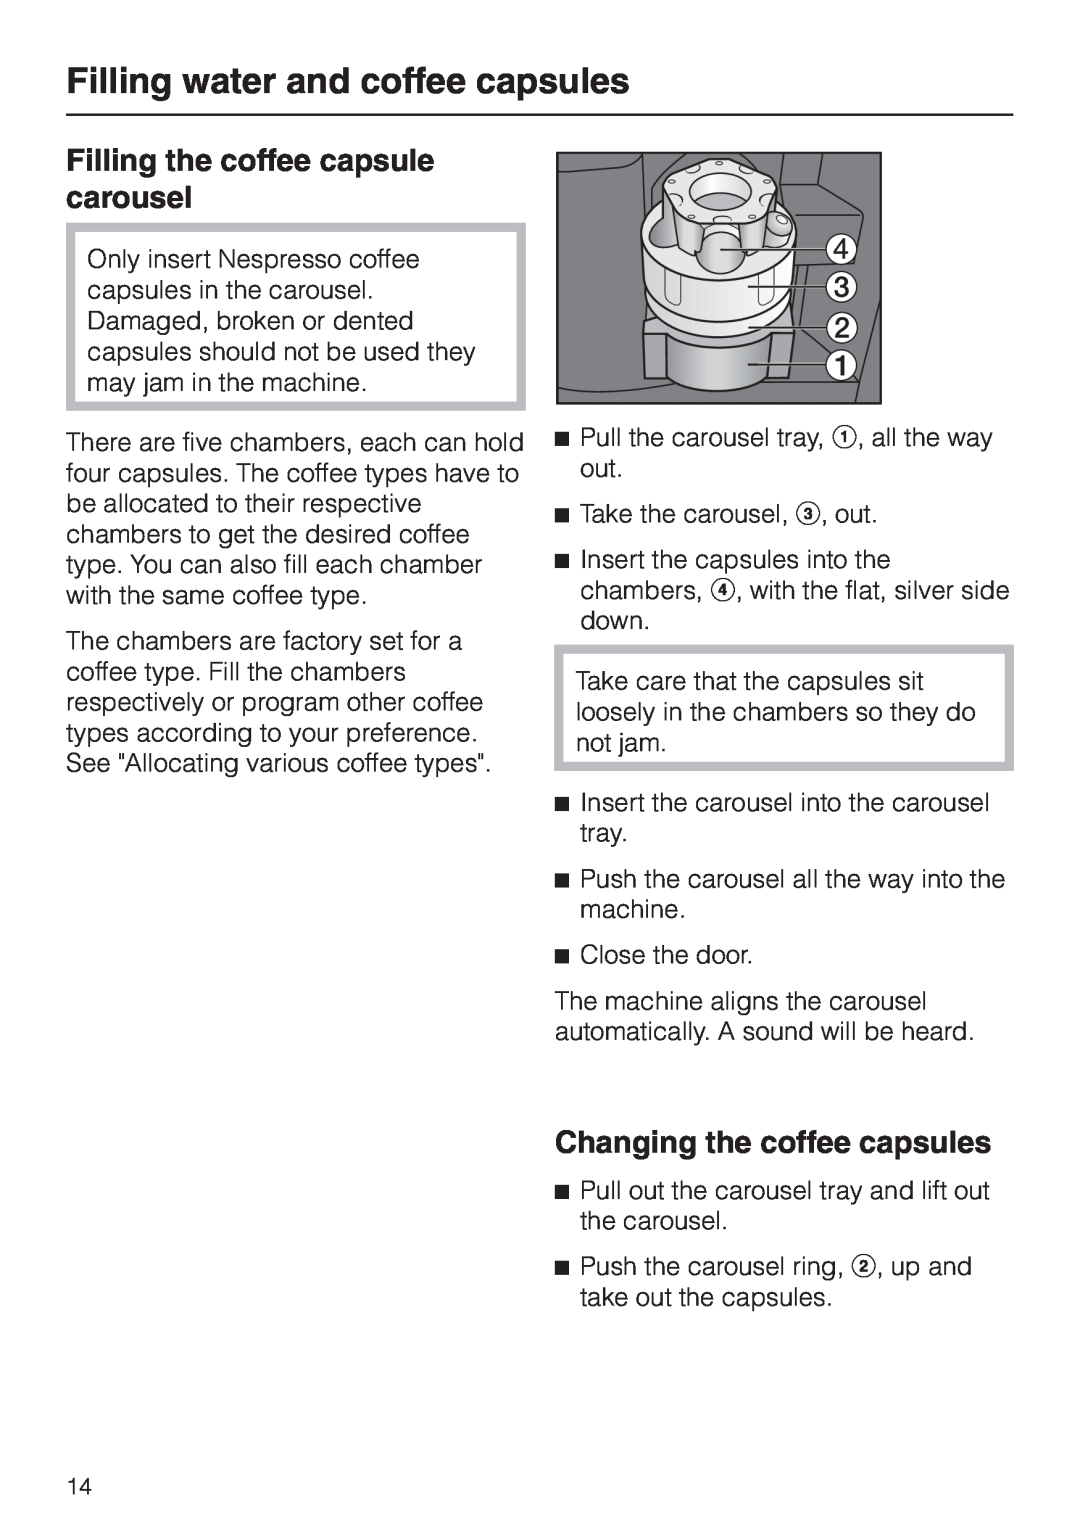 Miele CVA 2660 manual Filling the coffee capsule carousel, Changing the coffee capsules, Filling water and coffee capsules 